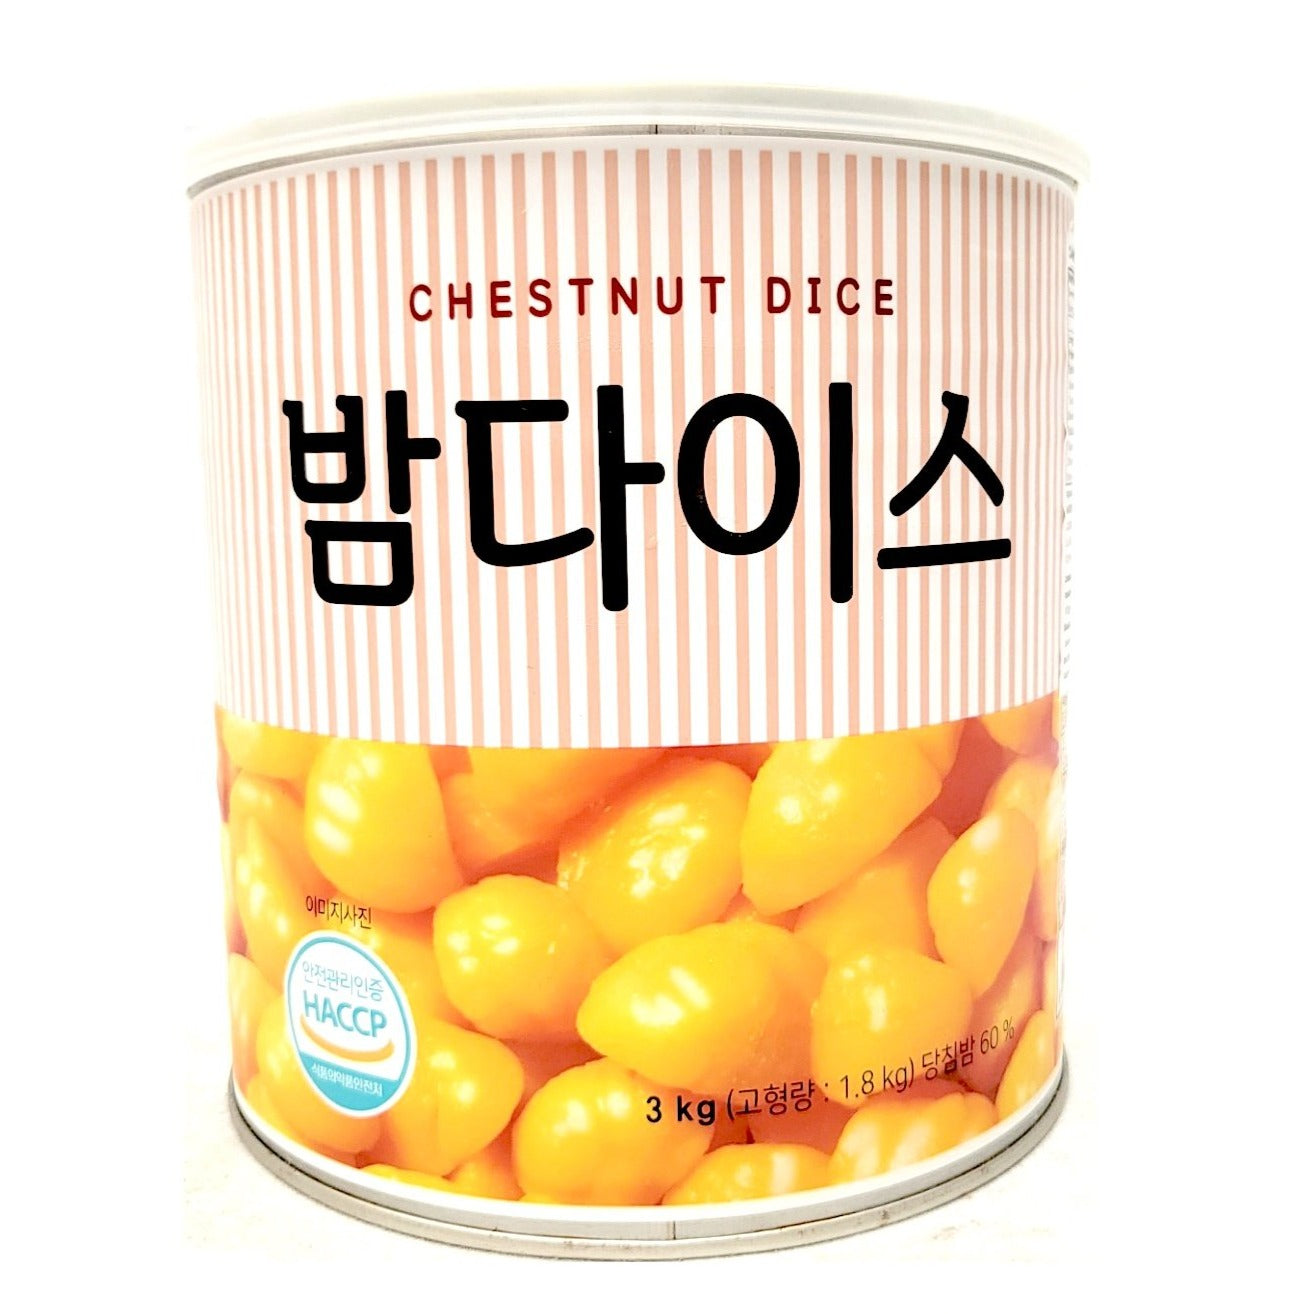 Canned Chestnut Dice 3kg*4/밤다이스 캔